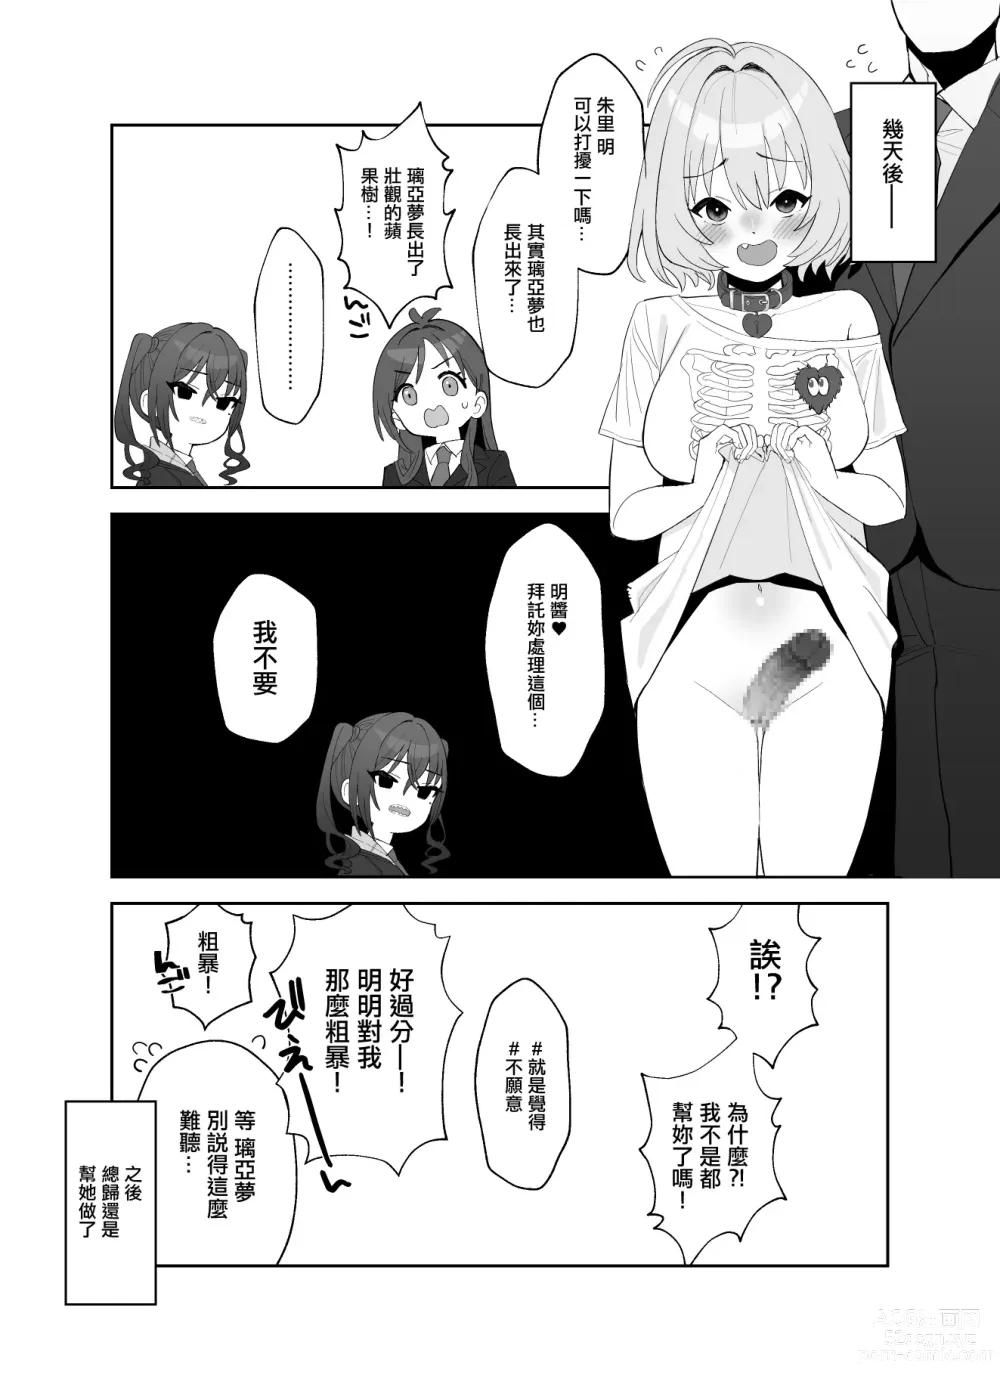 Page 14 of doujinshi 明長出了肉棒與璃亞夢做愛的漫畫